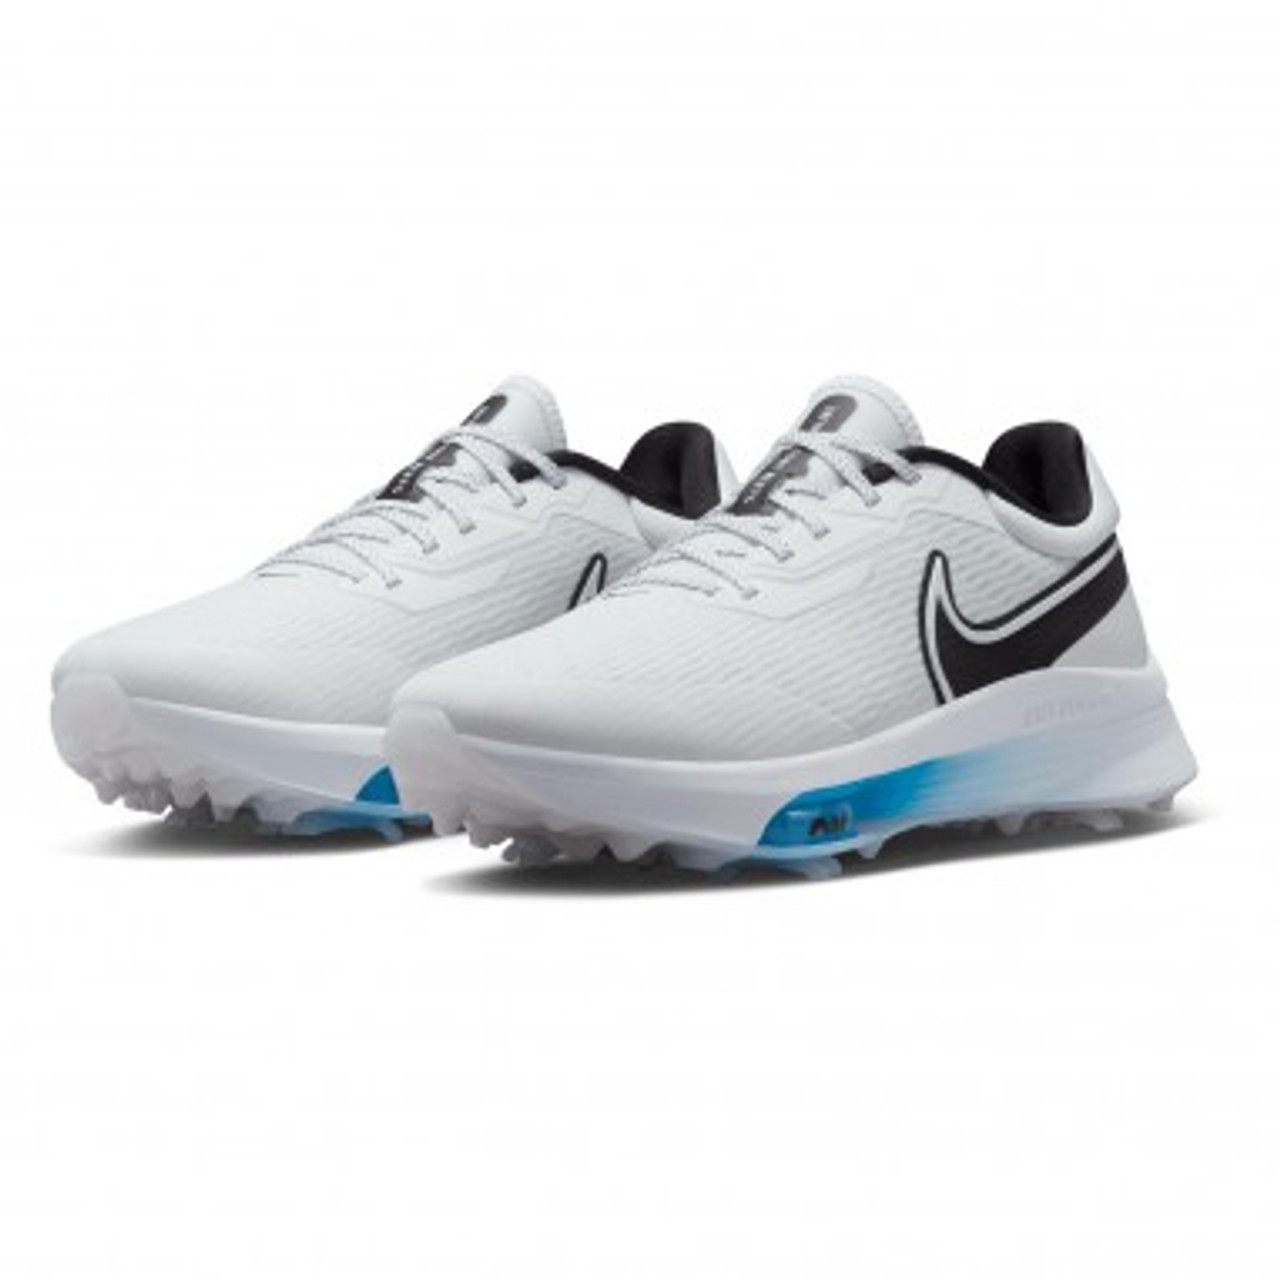 Nike Air Zoom Infinity Tour Next Golf Shoes - White/Black/Photo Blue